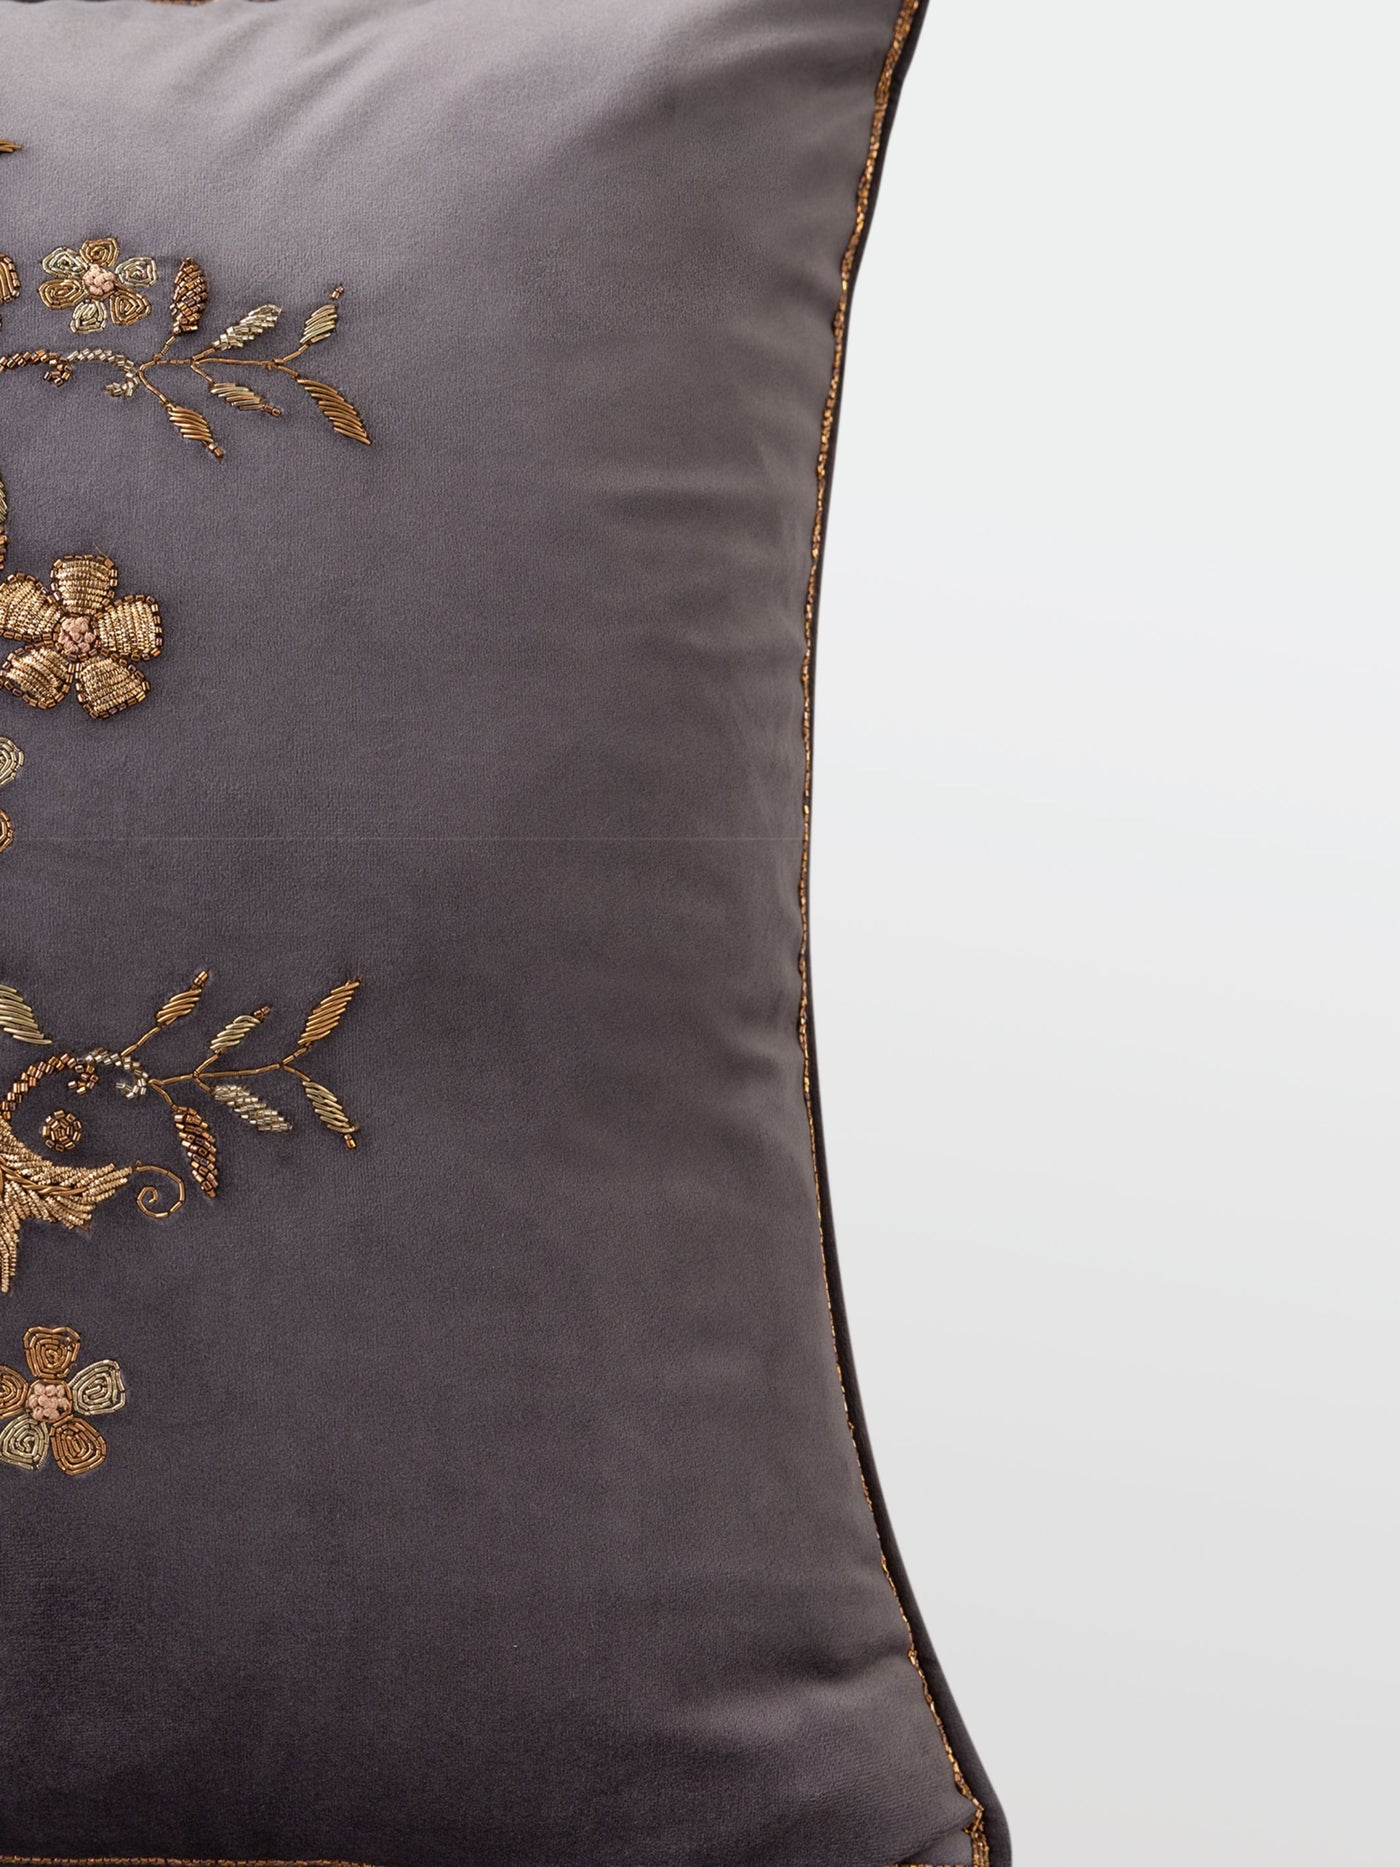 Cushion Cover - Qadir Charcoal Embroidered